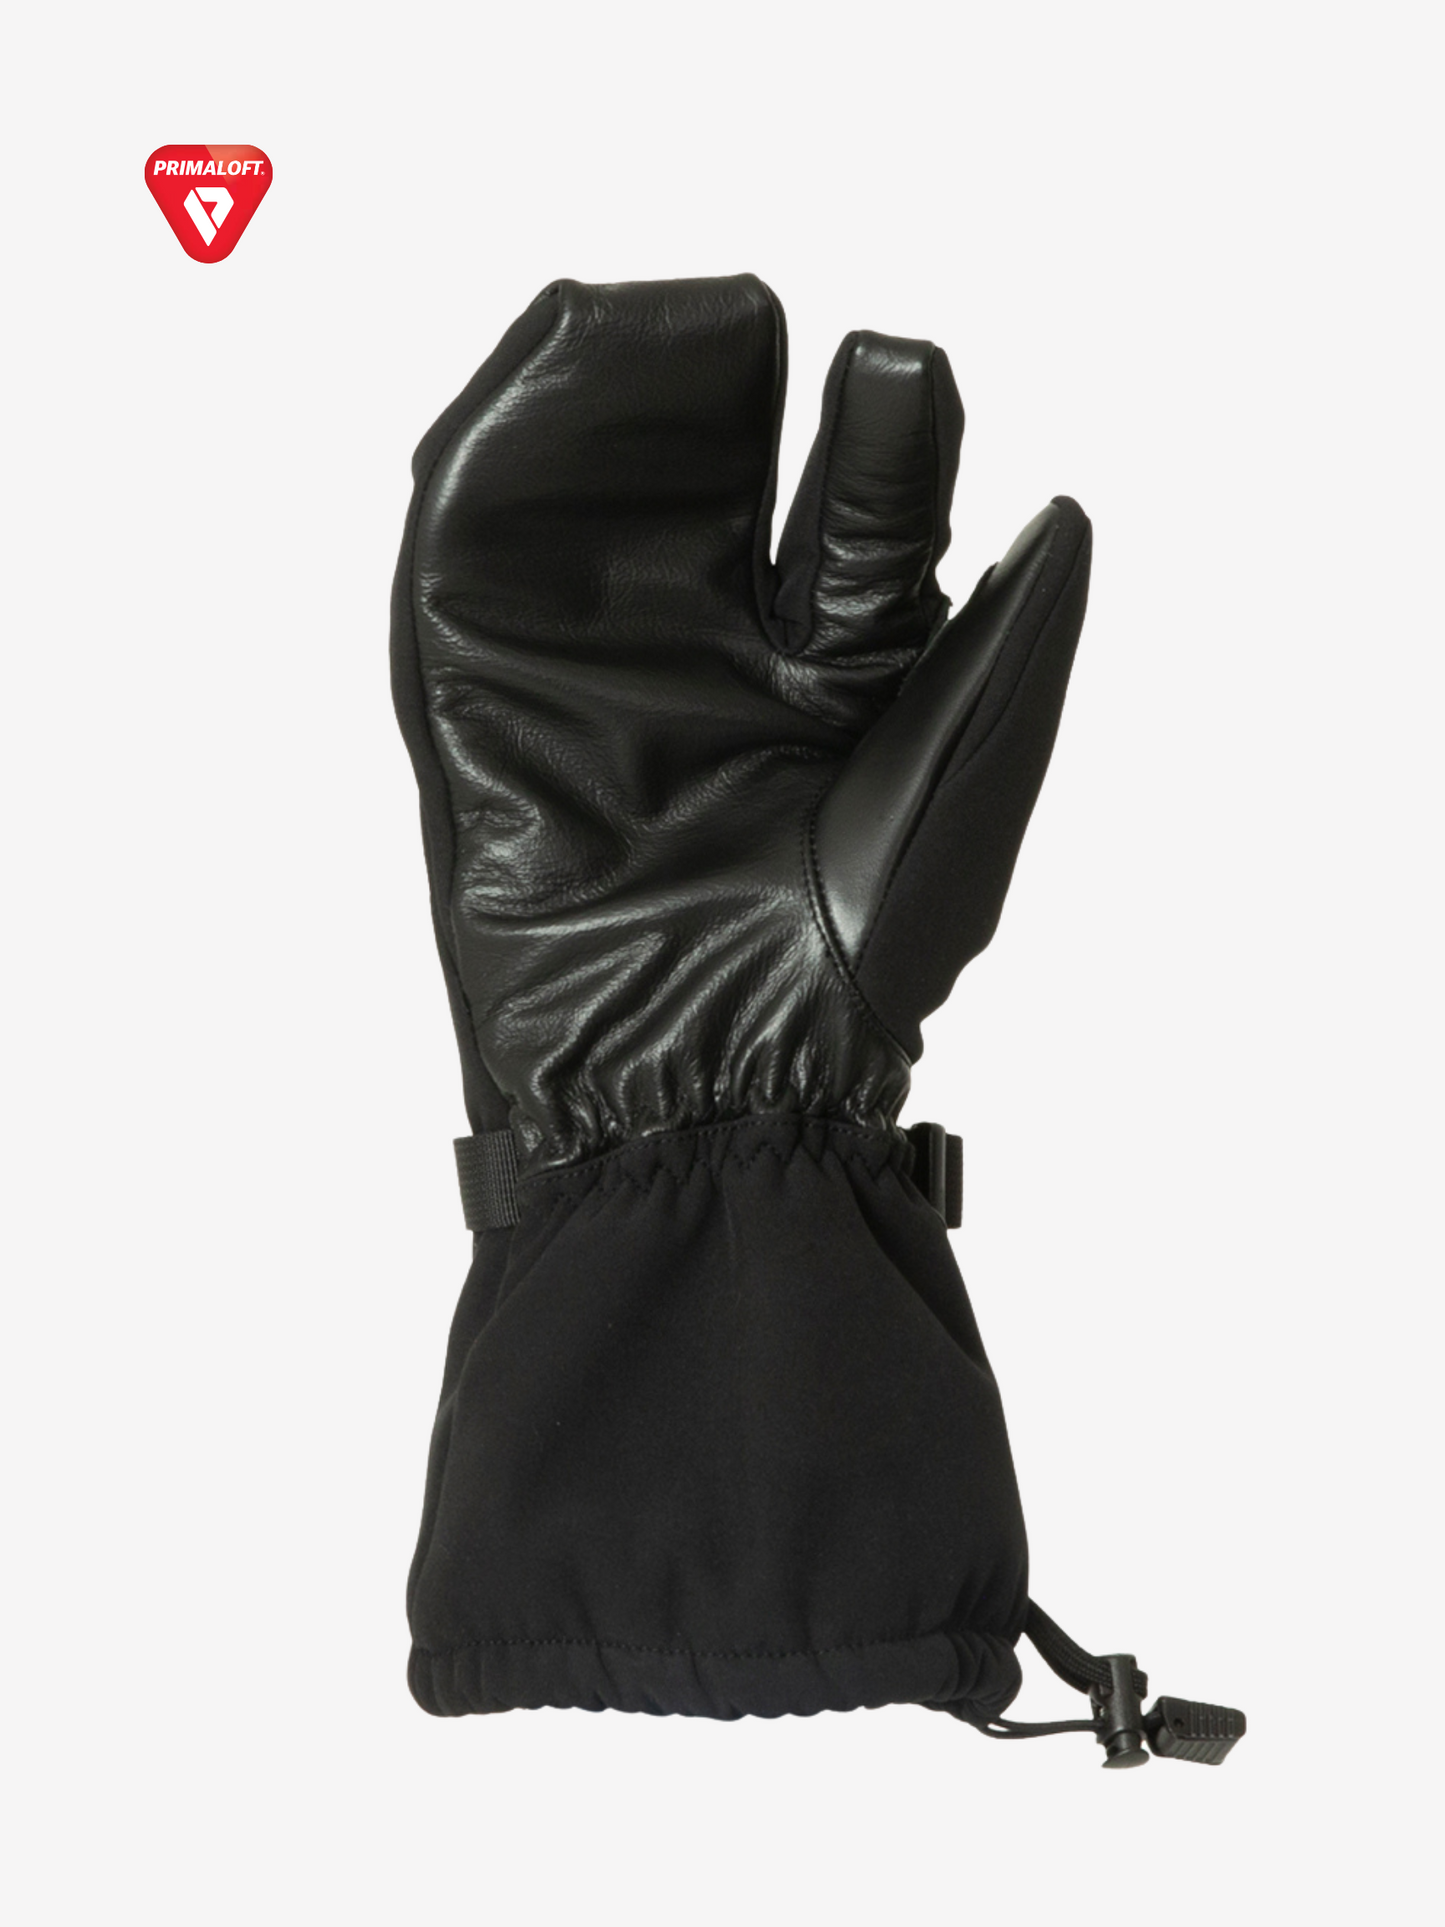 CS-ONE Series™ Shocker Glove